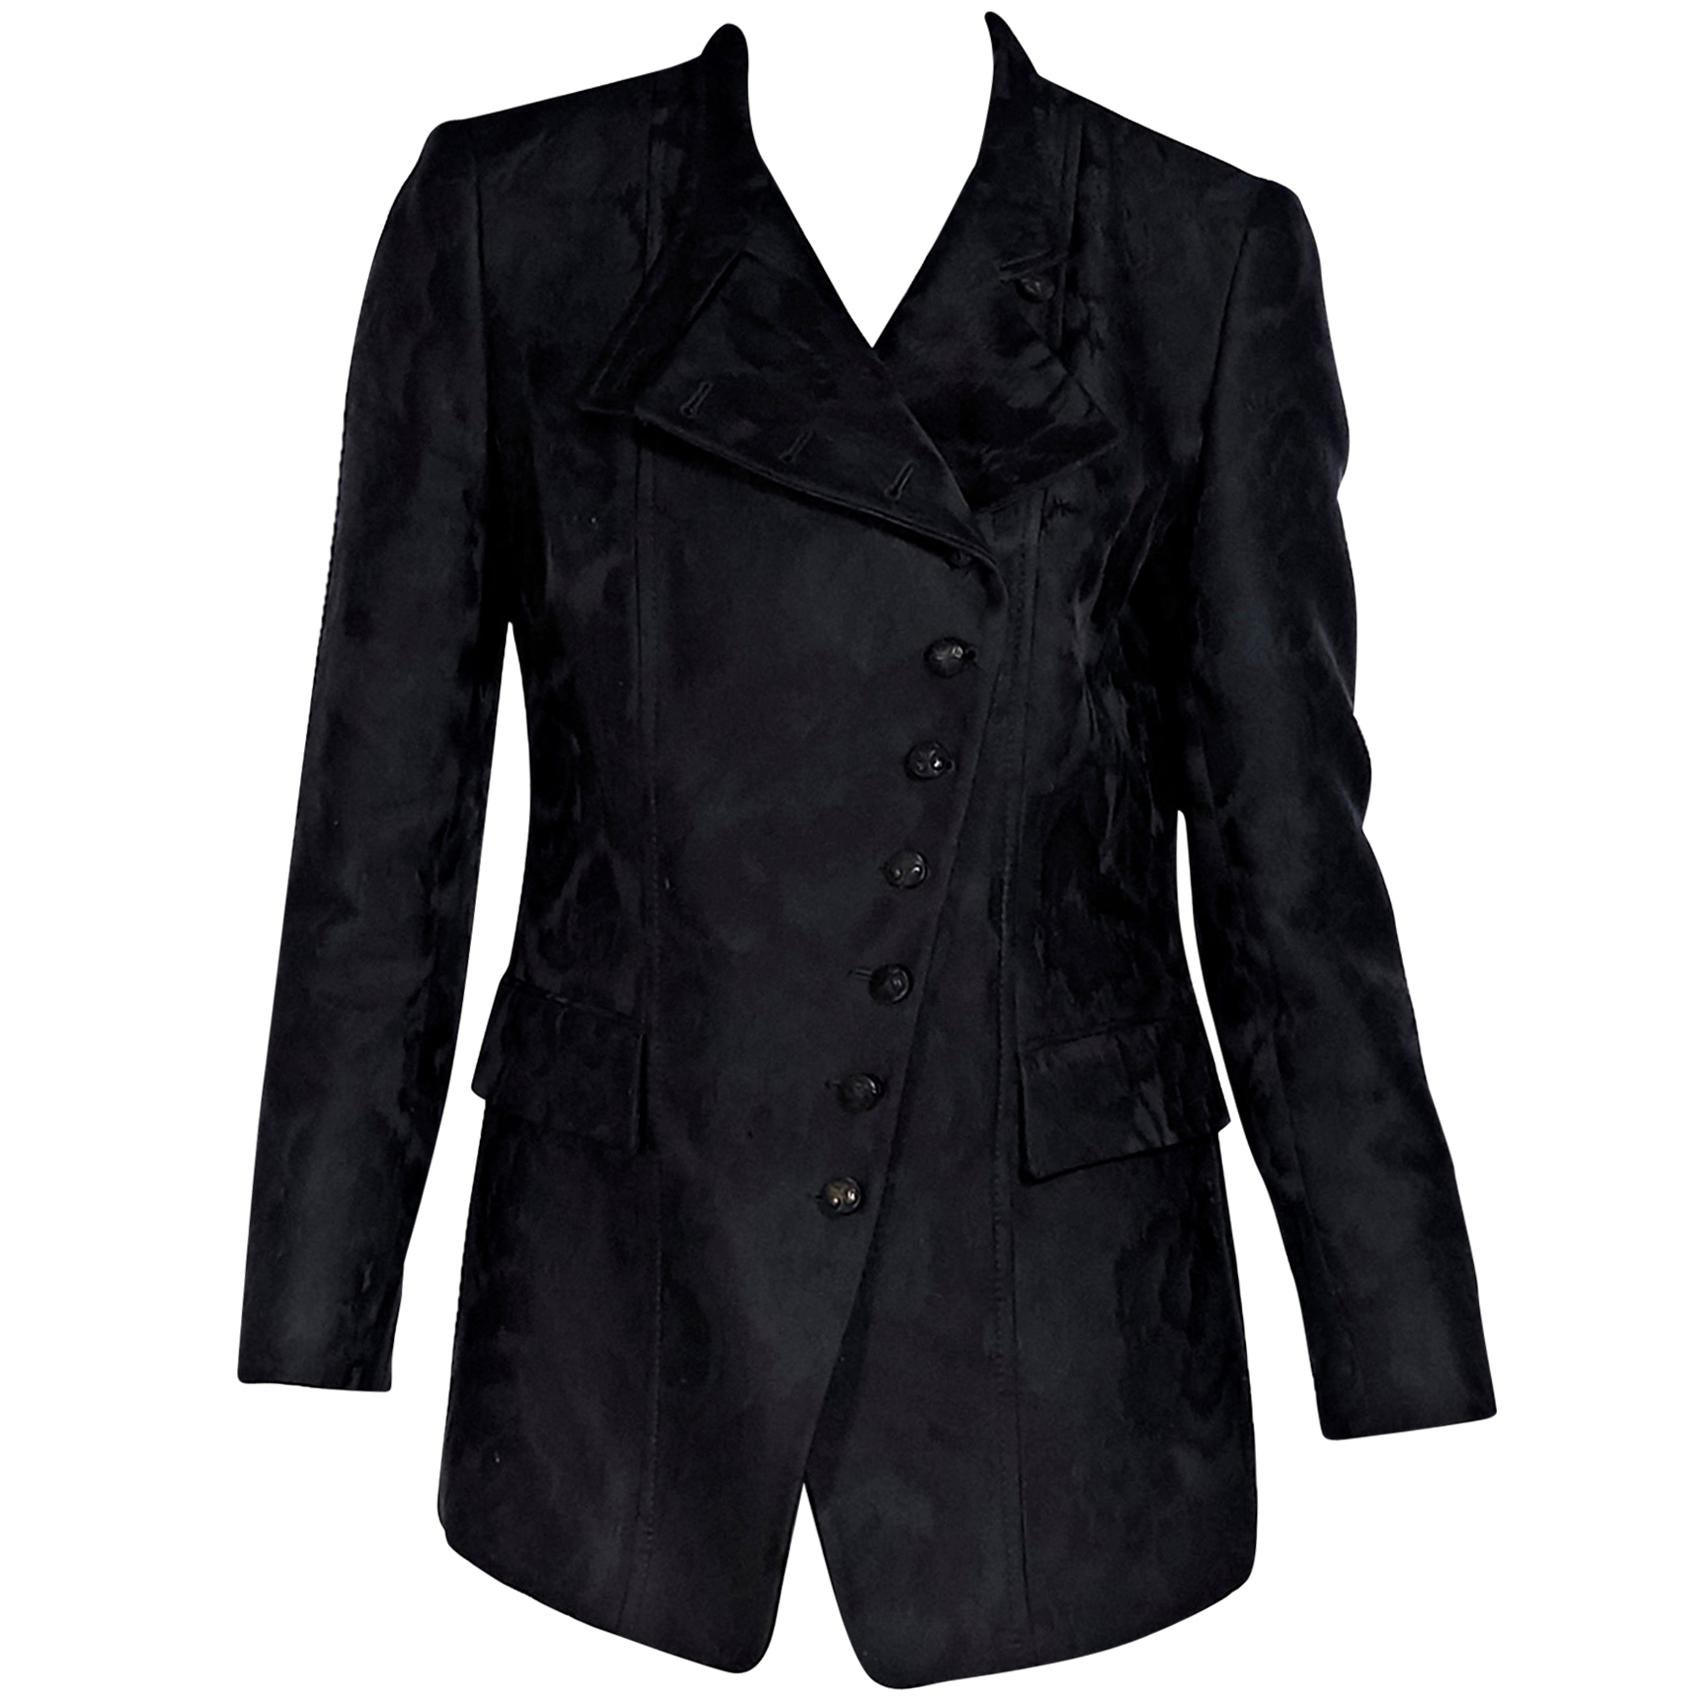  Gucci Black Brocade Wool-Blend Jacket